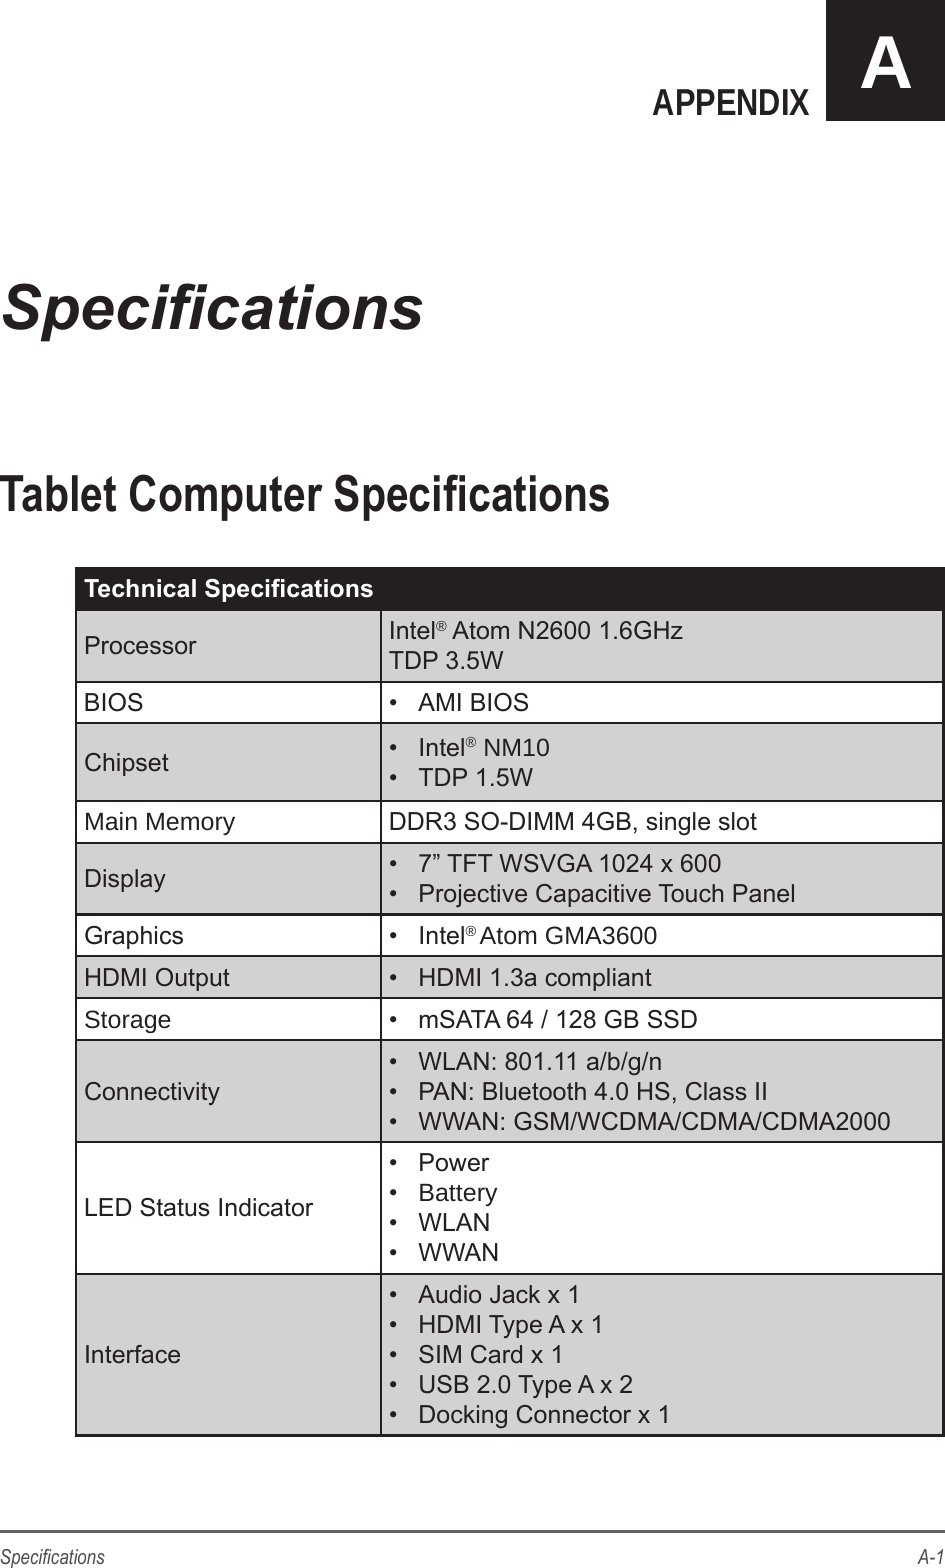 A-1SpecicationsAPPENDIX ATablet Computer SpecicationsTechnical SpecicationsProcessor Intel® Atom N2600 1.6GHz TDP 3.5WBIOS •  AMI BIOSChipset •  Intel® NM10•  TDP 1.5WMain Memory DDR3 SO-DIMM 4GB, single slotDisplay •  7” TFT WSVGA 1024 x 600 •  Projective Capacitive Touch Panel Graphics •  Intel® Atom GMA3600HDMI Output •  HDMI 1.3a compliantStorage  •  mSATA 64 / 128 GB SSDConnectivity•  WLAN: 801.11 a/b/g/n•  PAN: Bluetooth 4.0 HS, Class II•  WWAN: GSM/WCDMA/CDMA/CDMA2000LED Status Indicator•  Power•  Battery•  WLAN•  WWANInterface•  Audio Jack x 1•  HDMI Type A x 1•  SIM Card x 1•  USB 2.0 Type A x 2•  Docking Connector x 1Specications